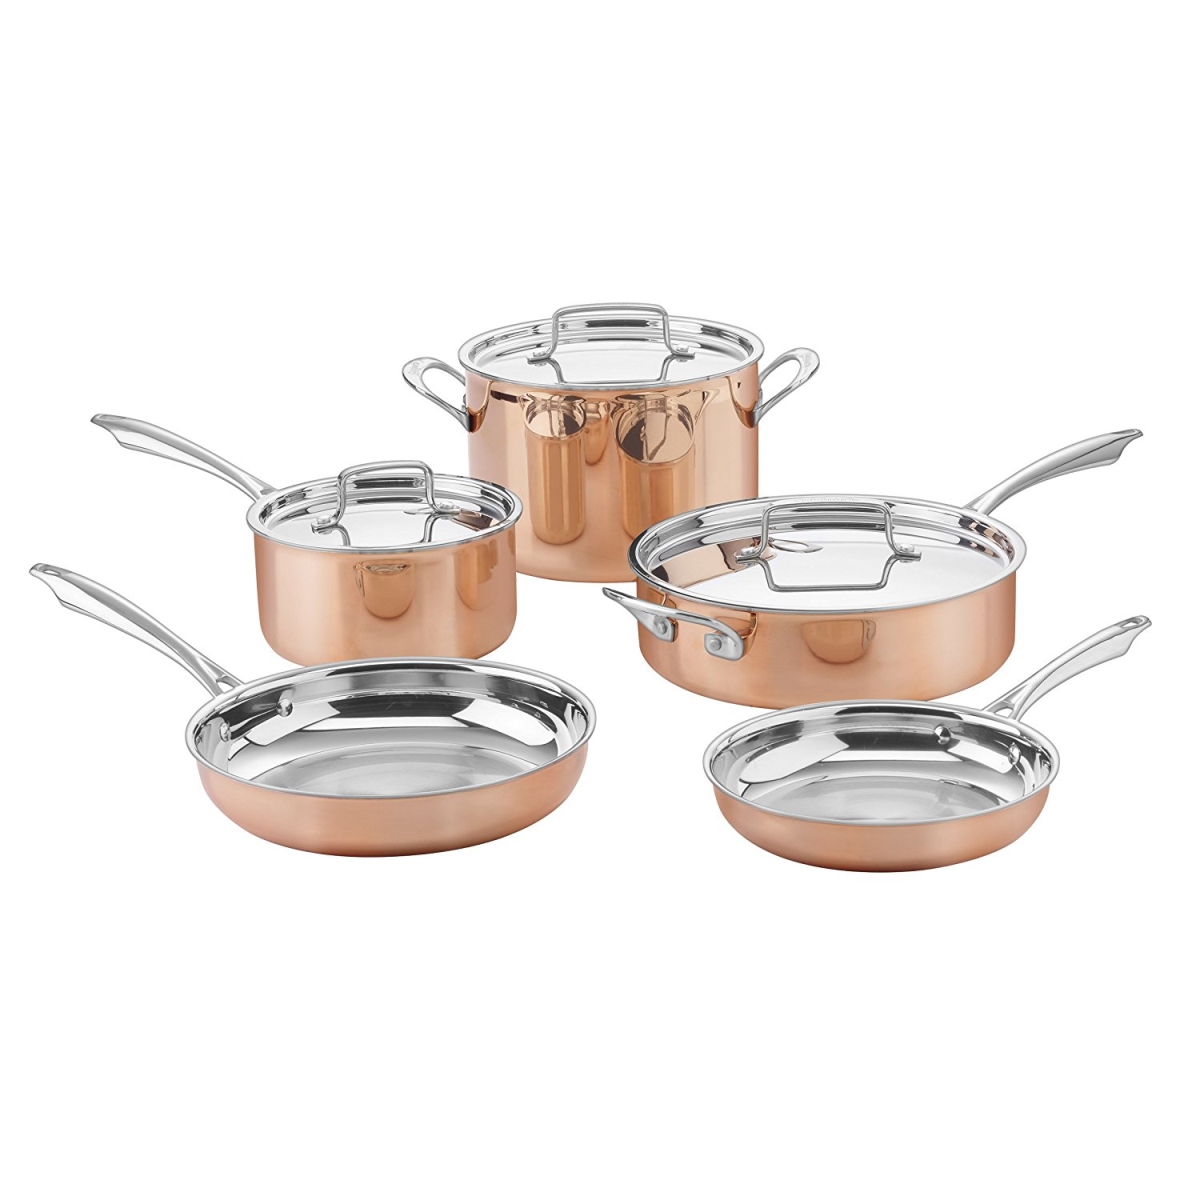 Conair-cuisinart Ctpp-8 Copper Tri-ply Cookware Set, 8 Pieces